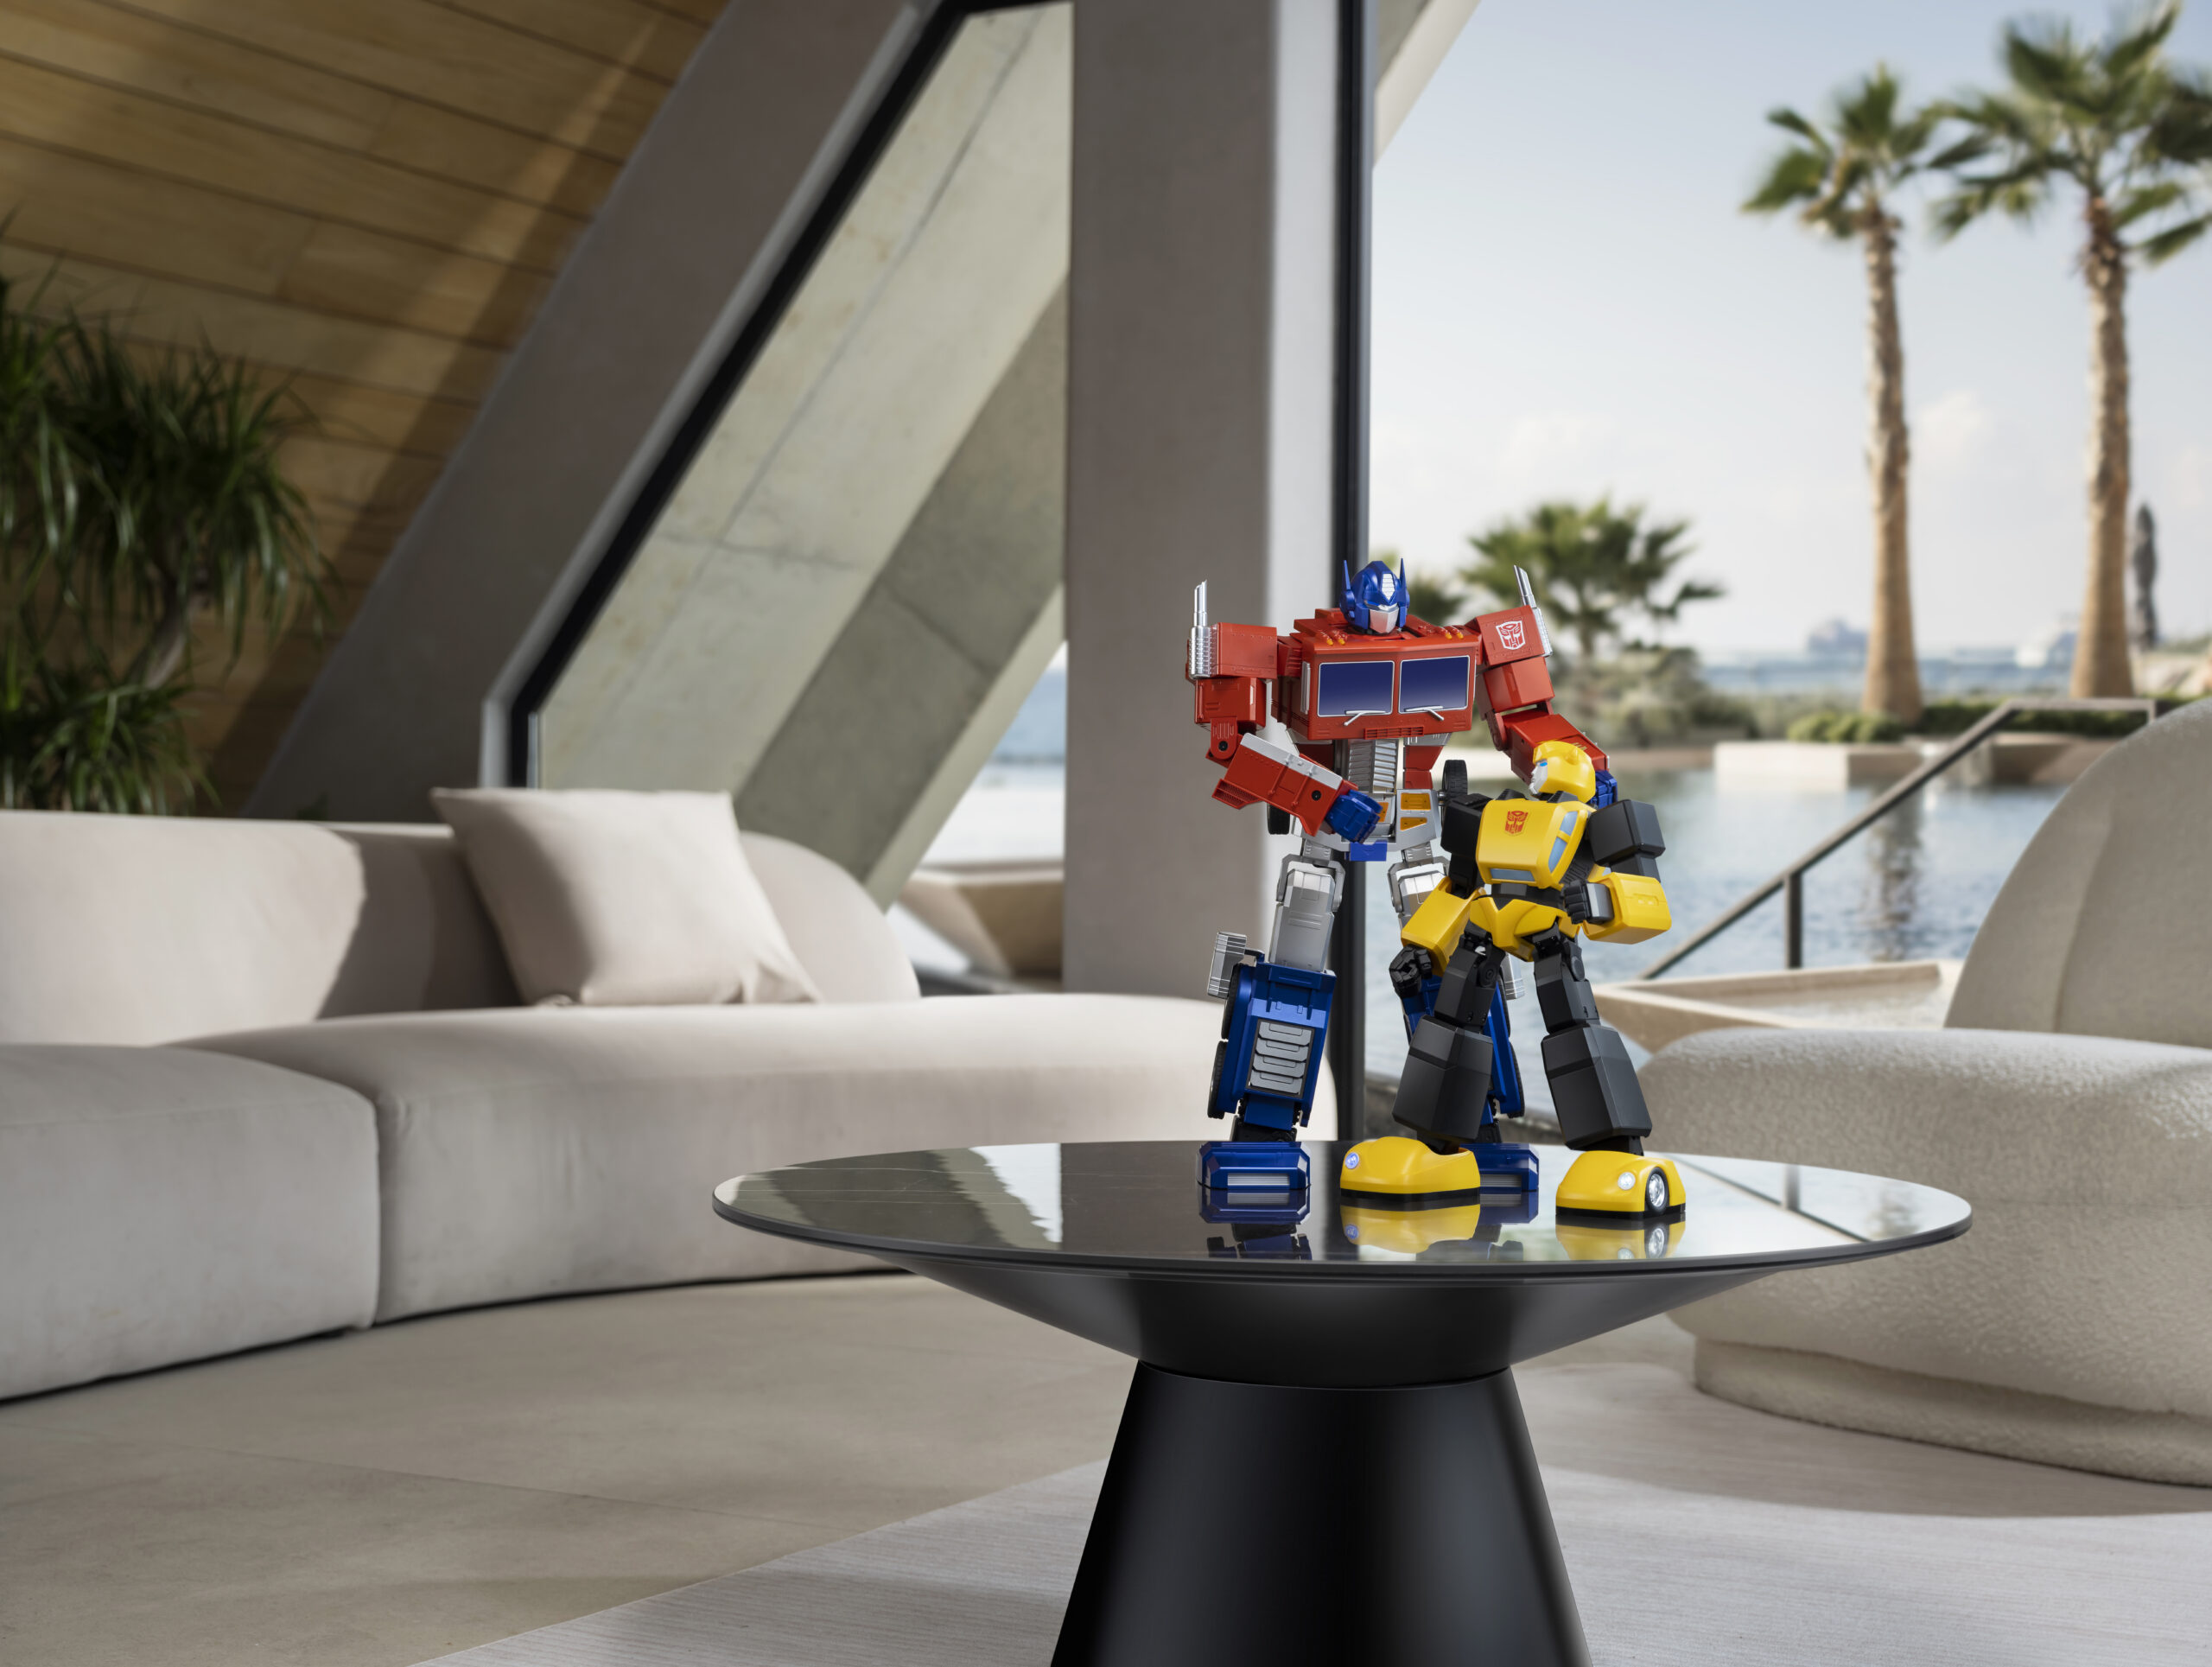 Bumblebee G1 Transformers Robot product image (Robosen Robotics)